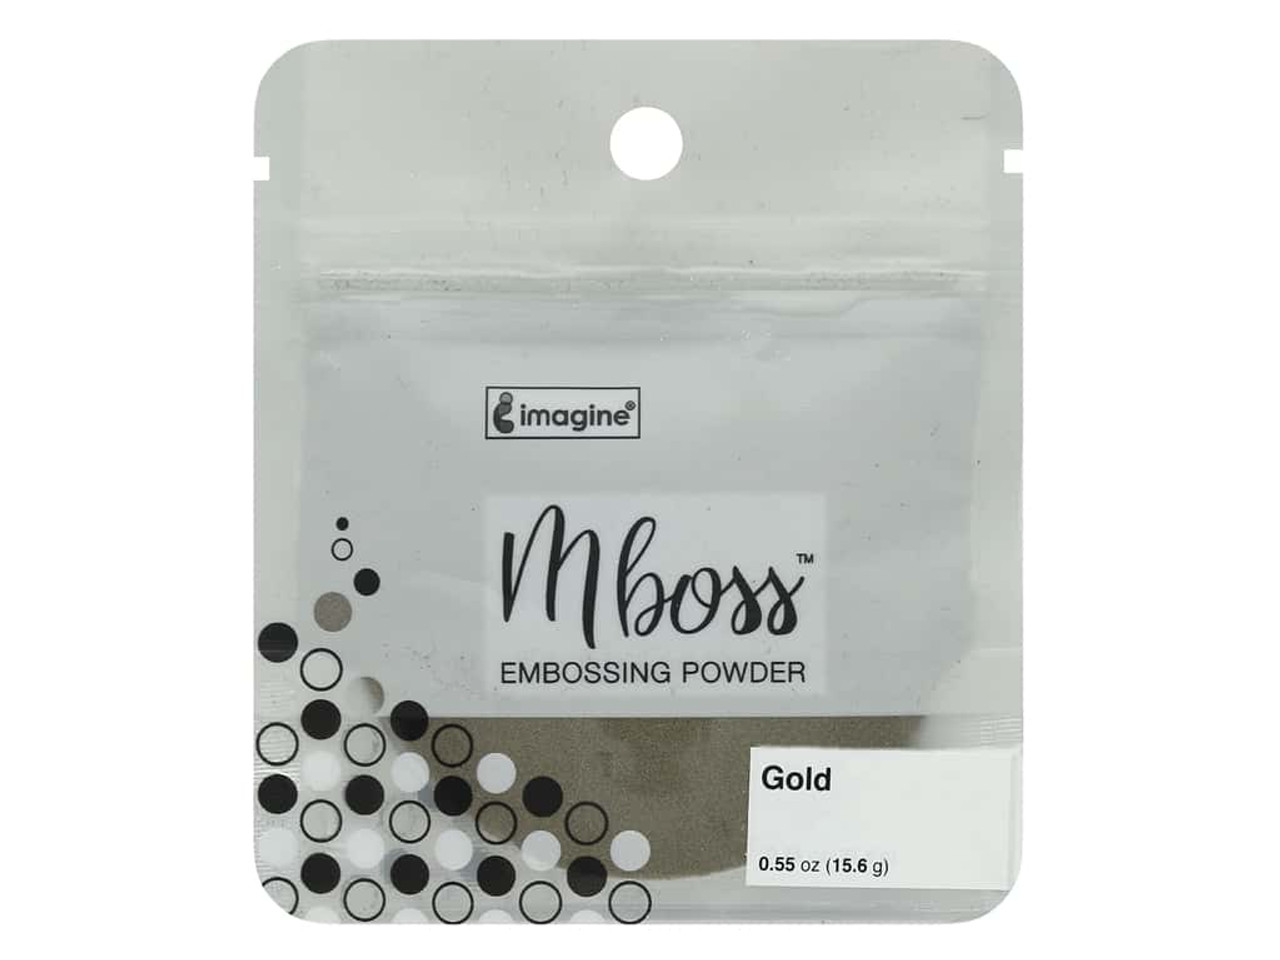 Imagine Crafts Mboss Powder .55 oz - Gold